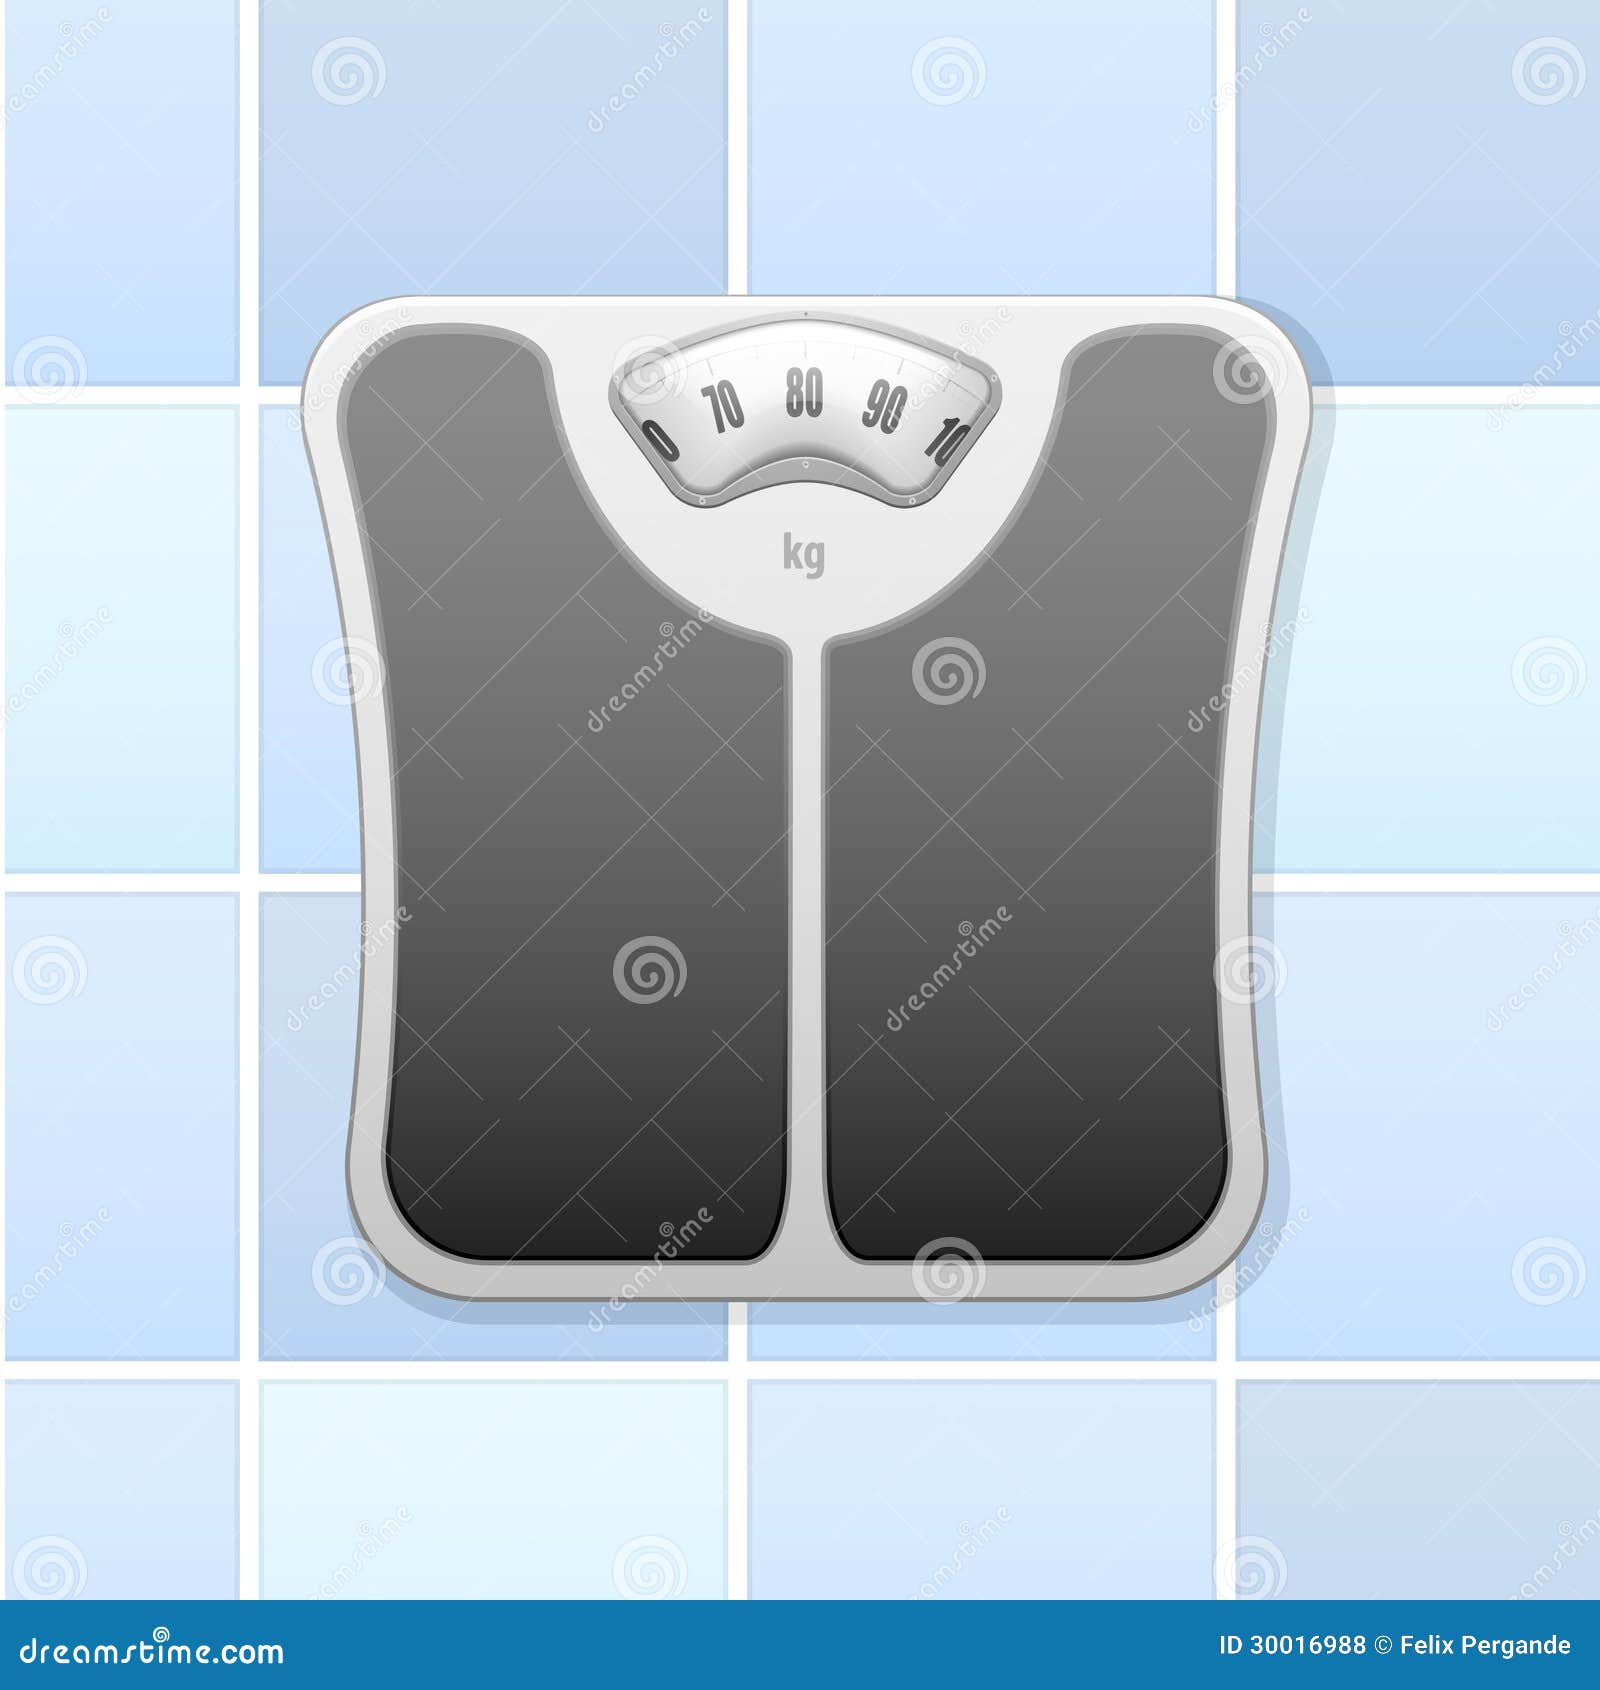 Bathroom scale stock vector. Illustration of body, concept